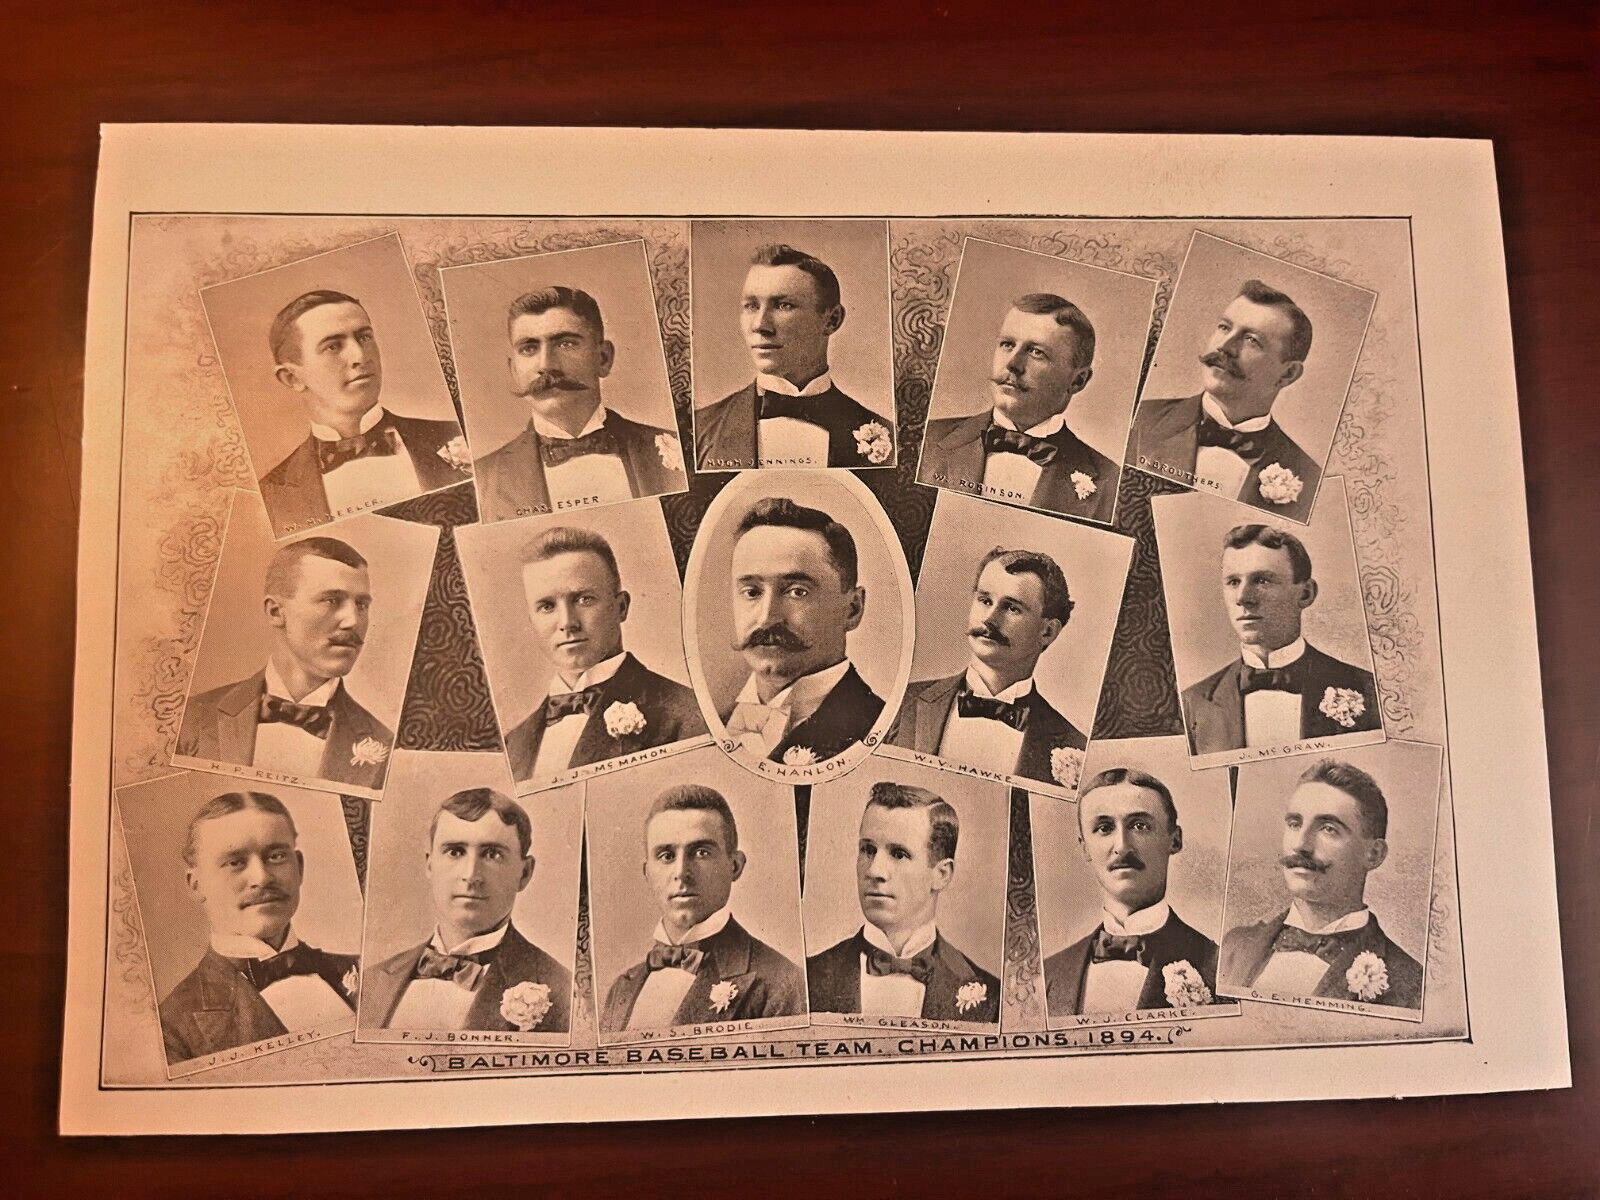 1894 LITHOGRAPH OF BALTIMORE BASEBALL TEAM CHAMPIONS - ORIGINAL LITHOGRAPH PRINT